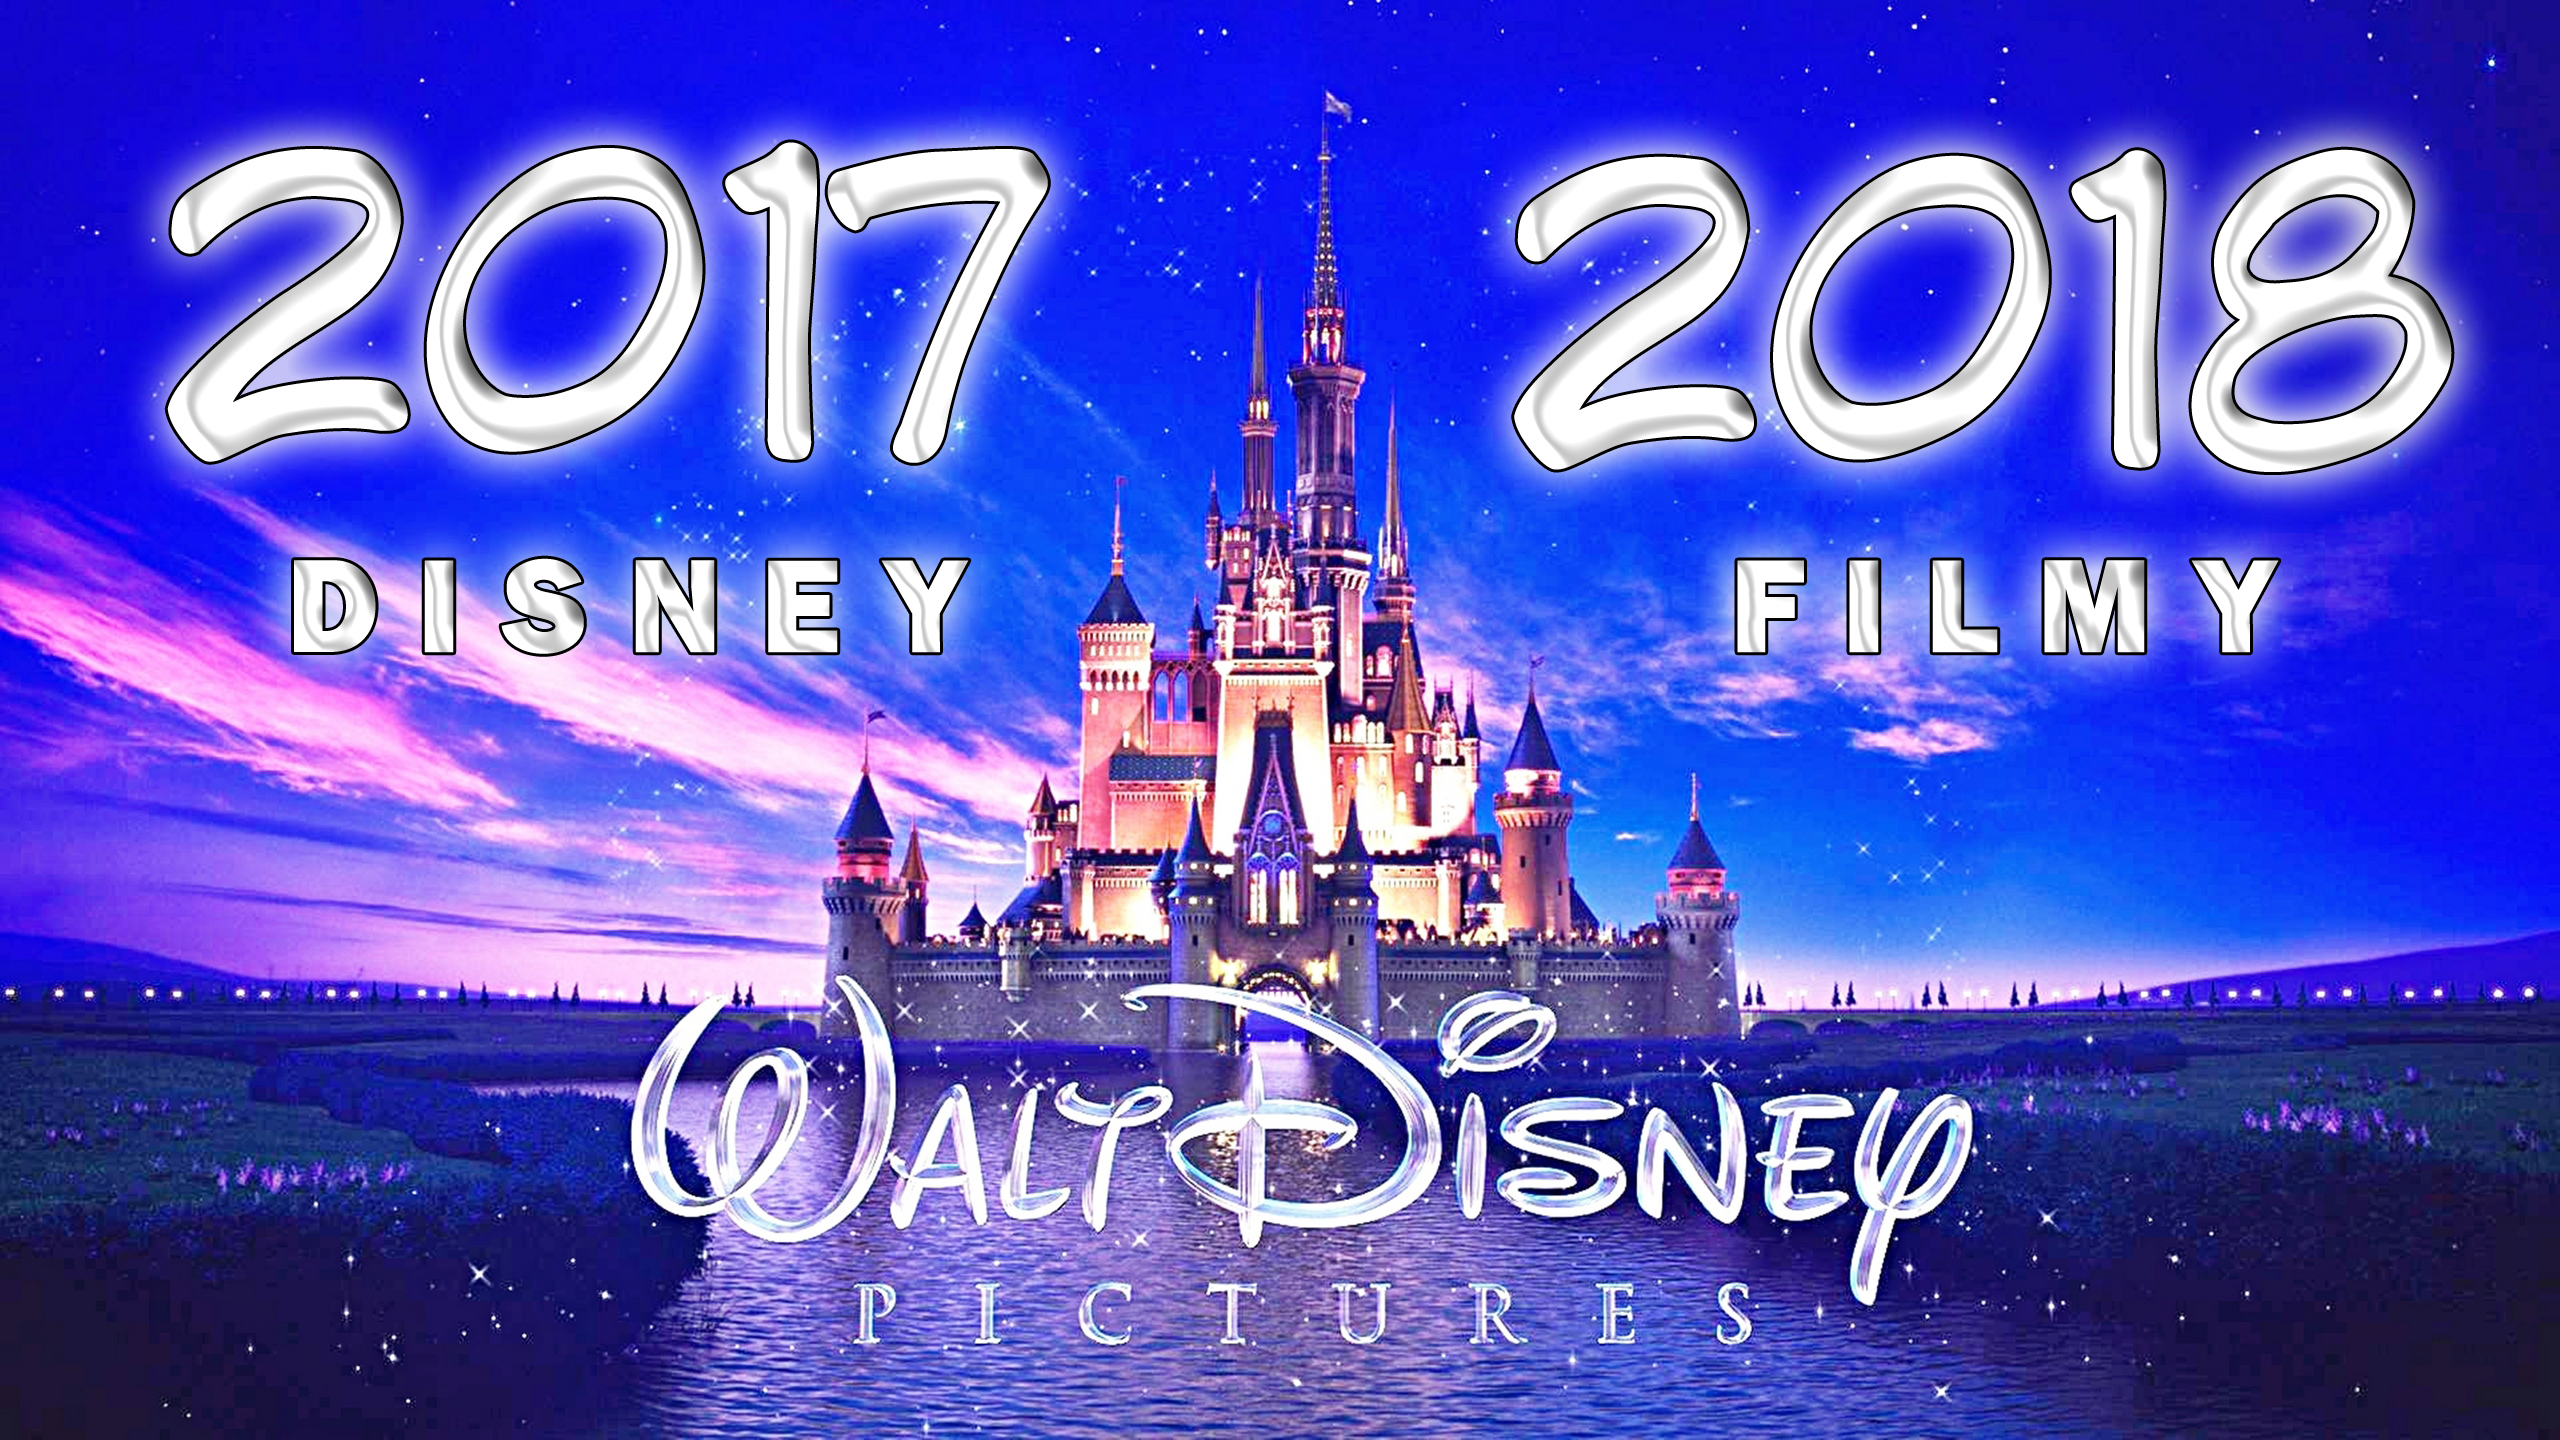 Disney filmy 2017 + 2018